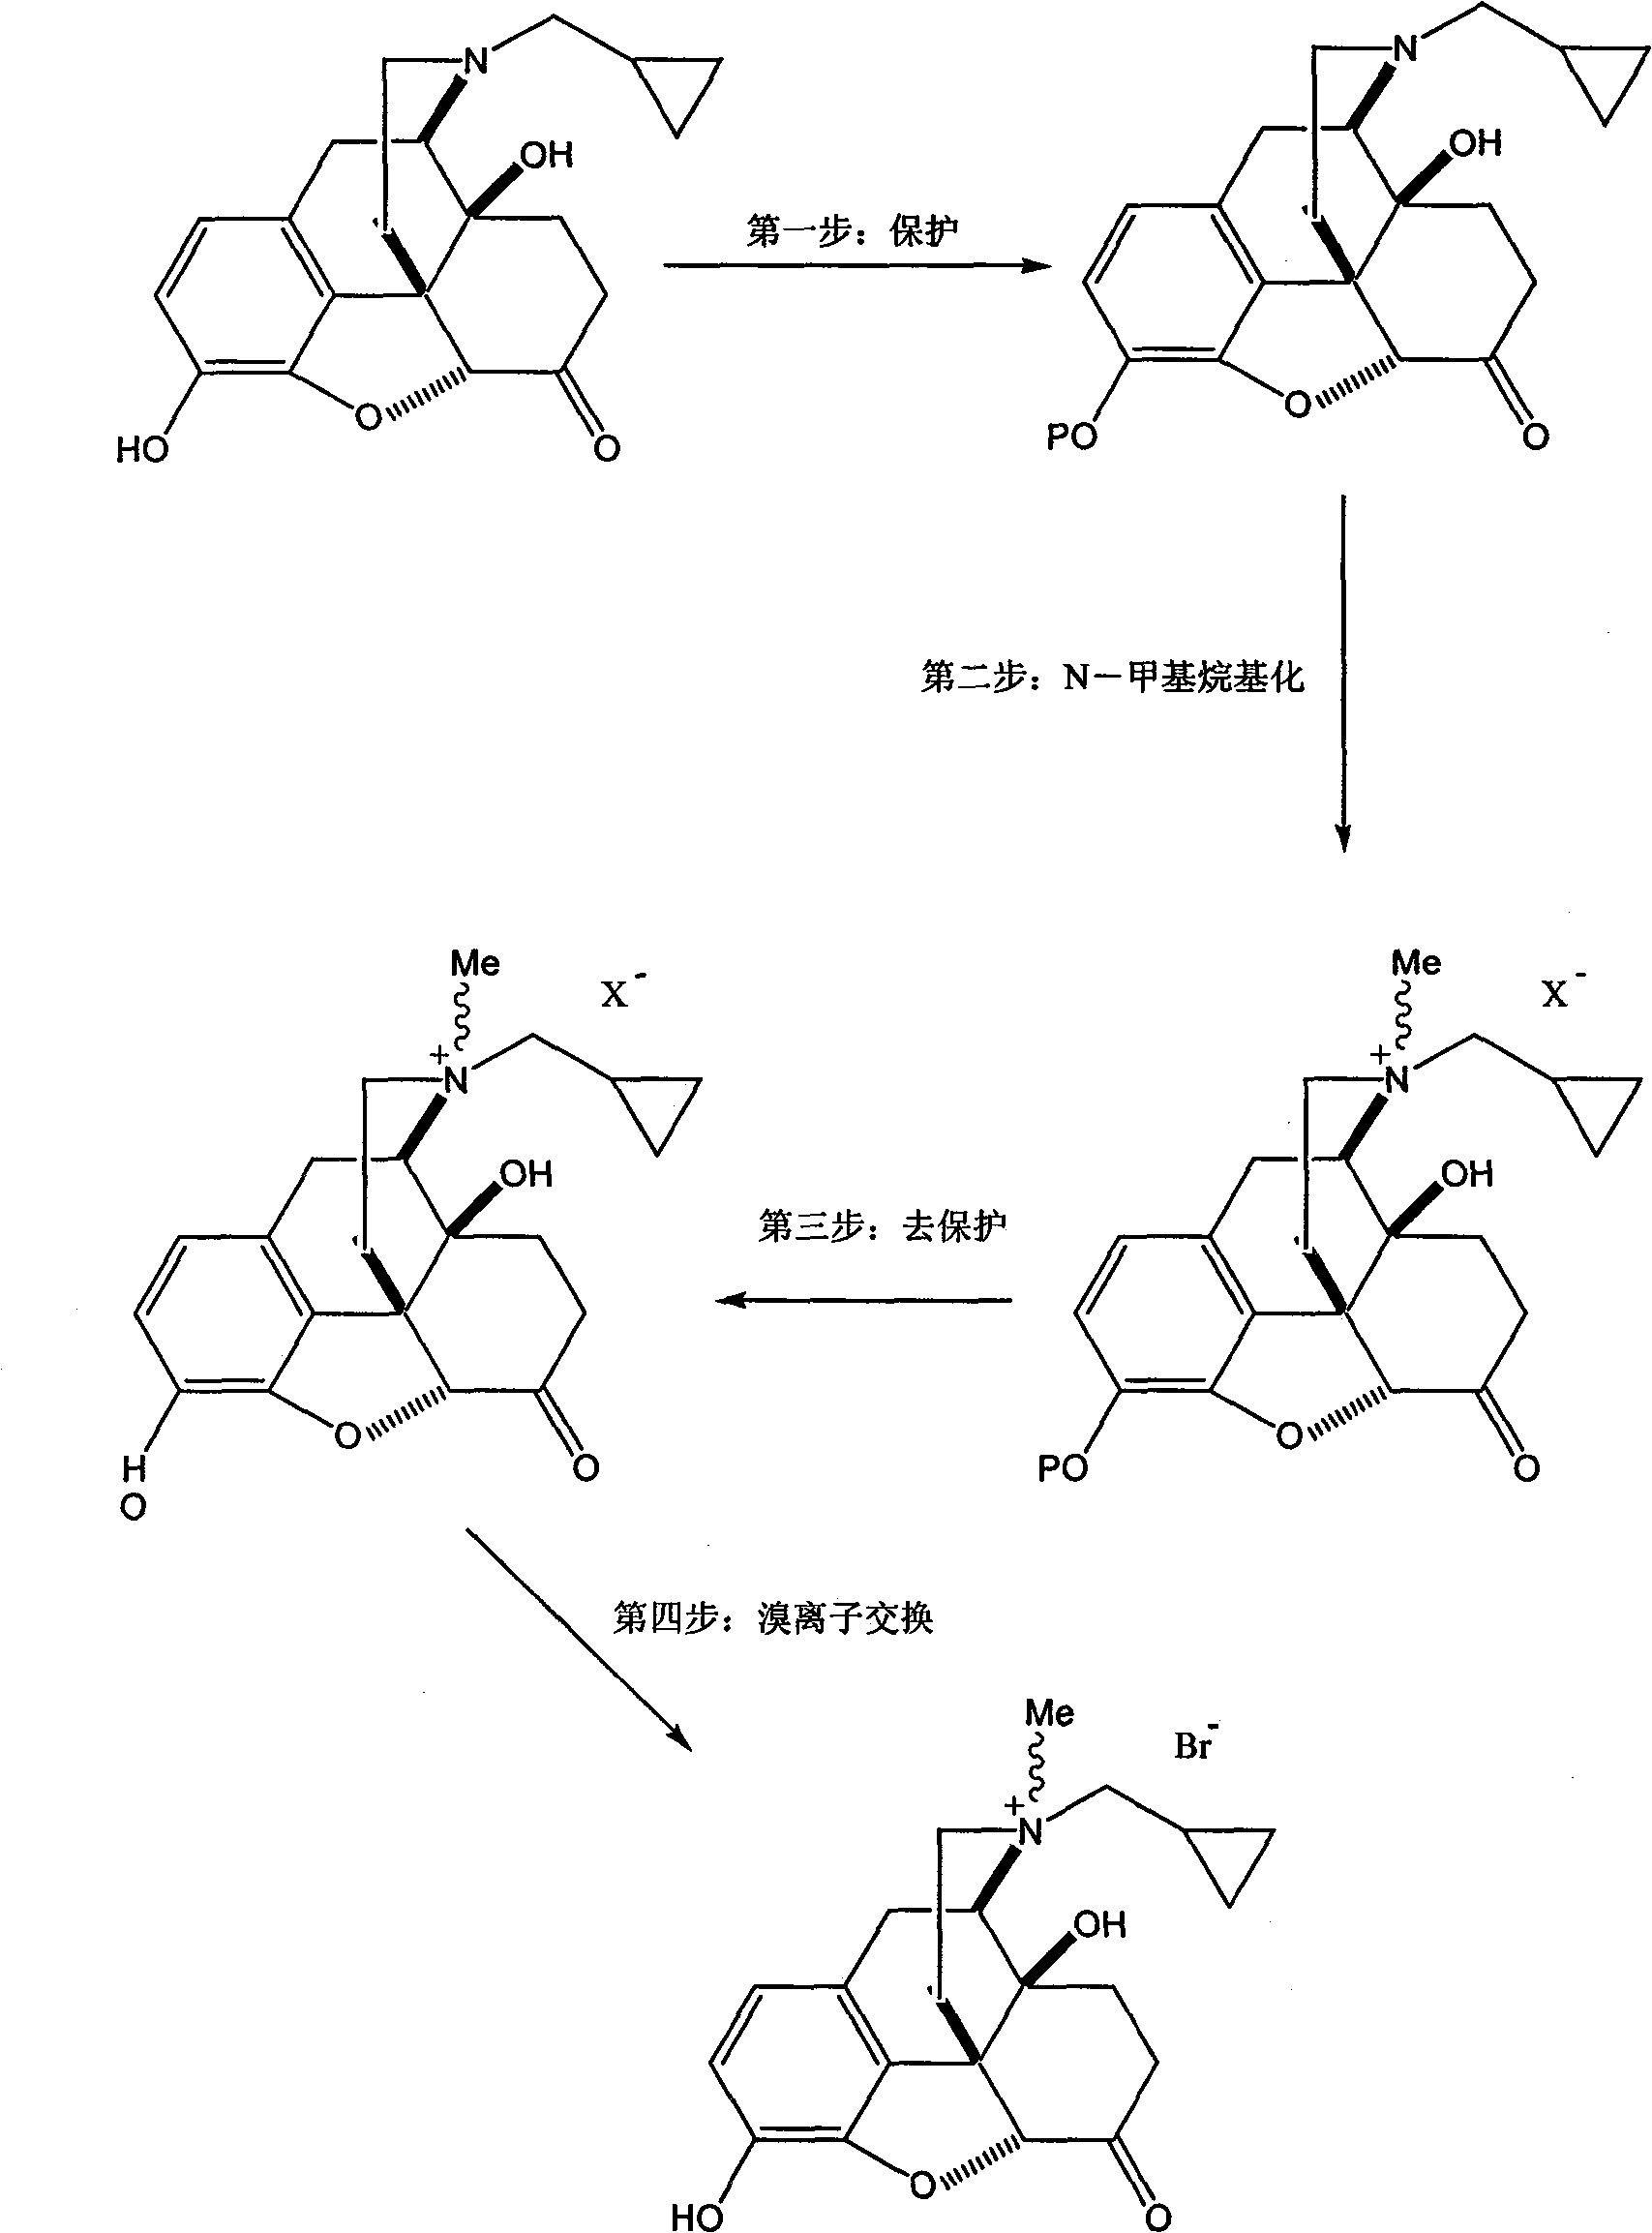 Method for preparing methylnaltrexone bromide